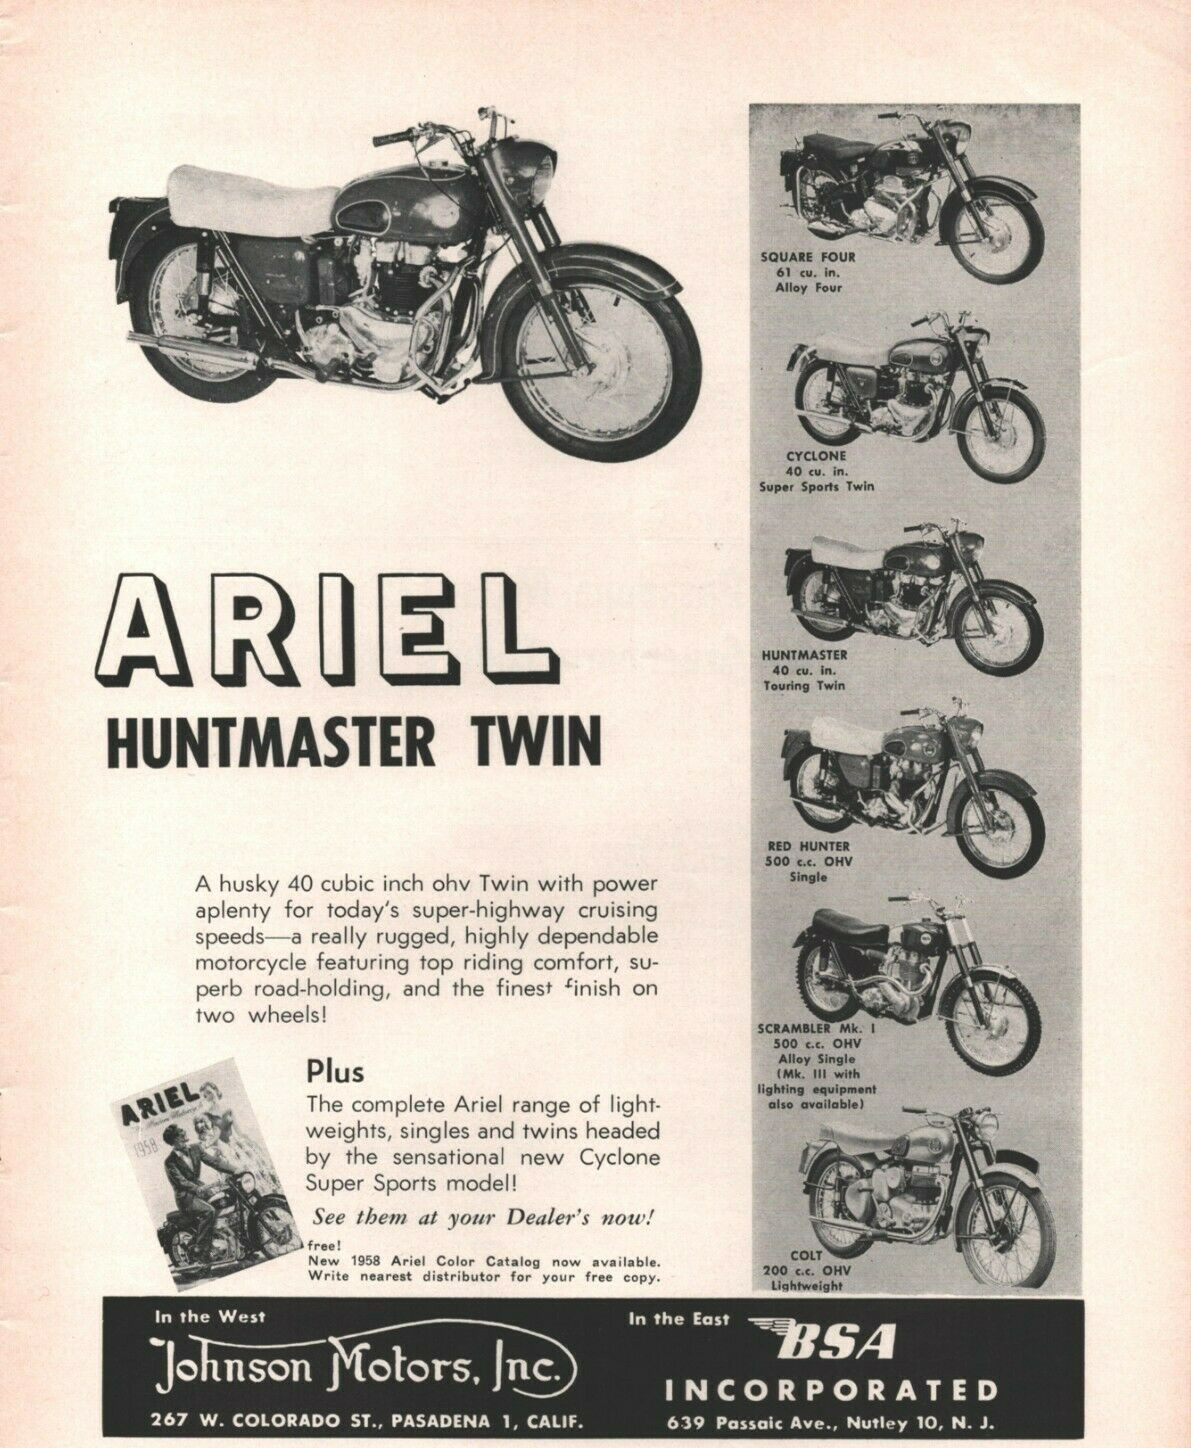 1958 Ariel Huntmaster Twin - Vintage Motorcycle Ad